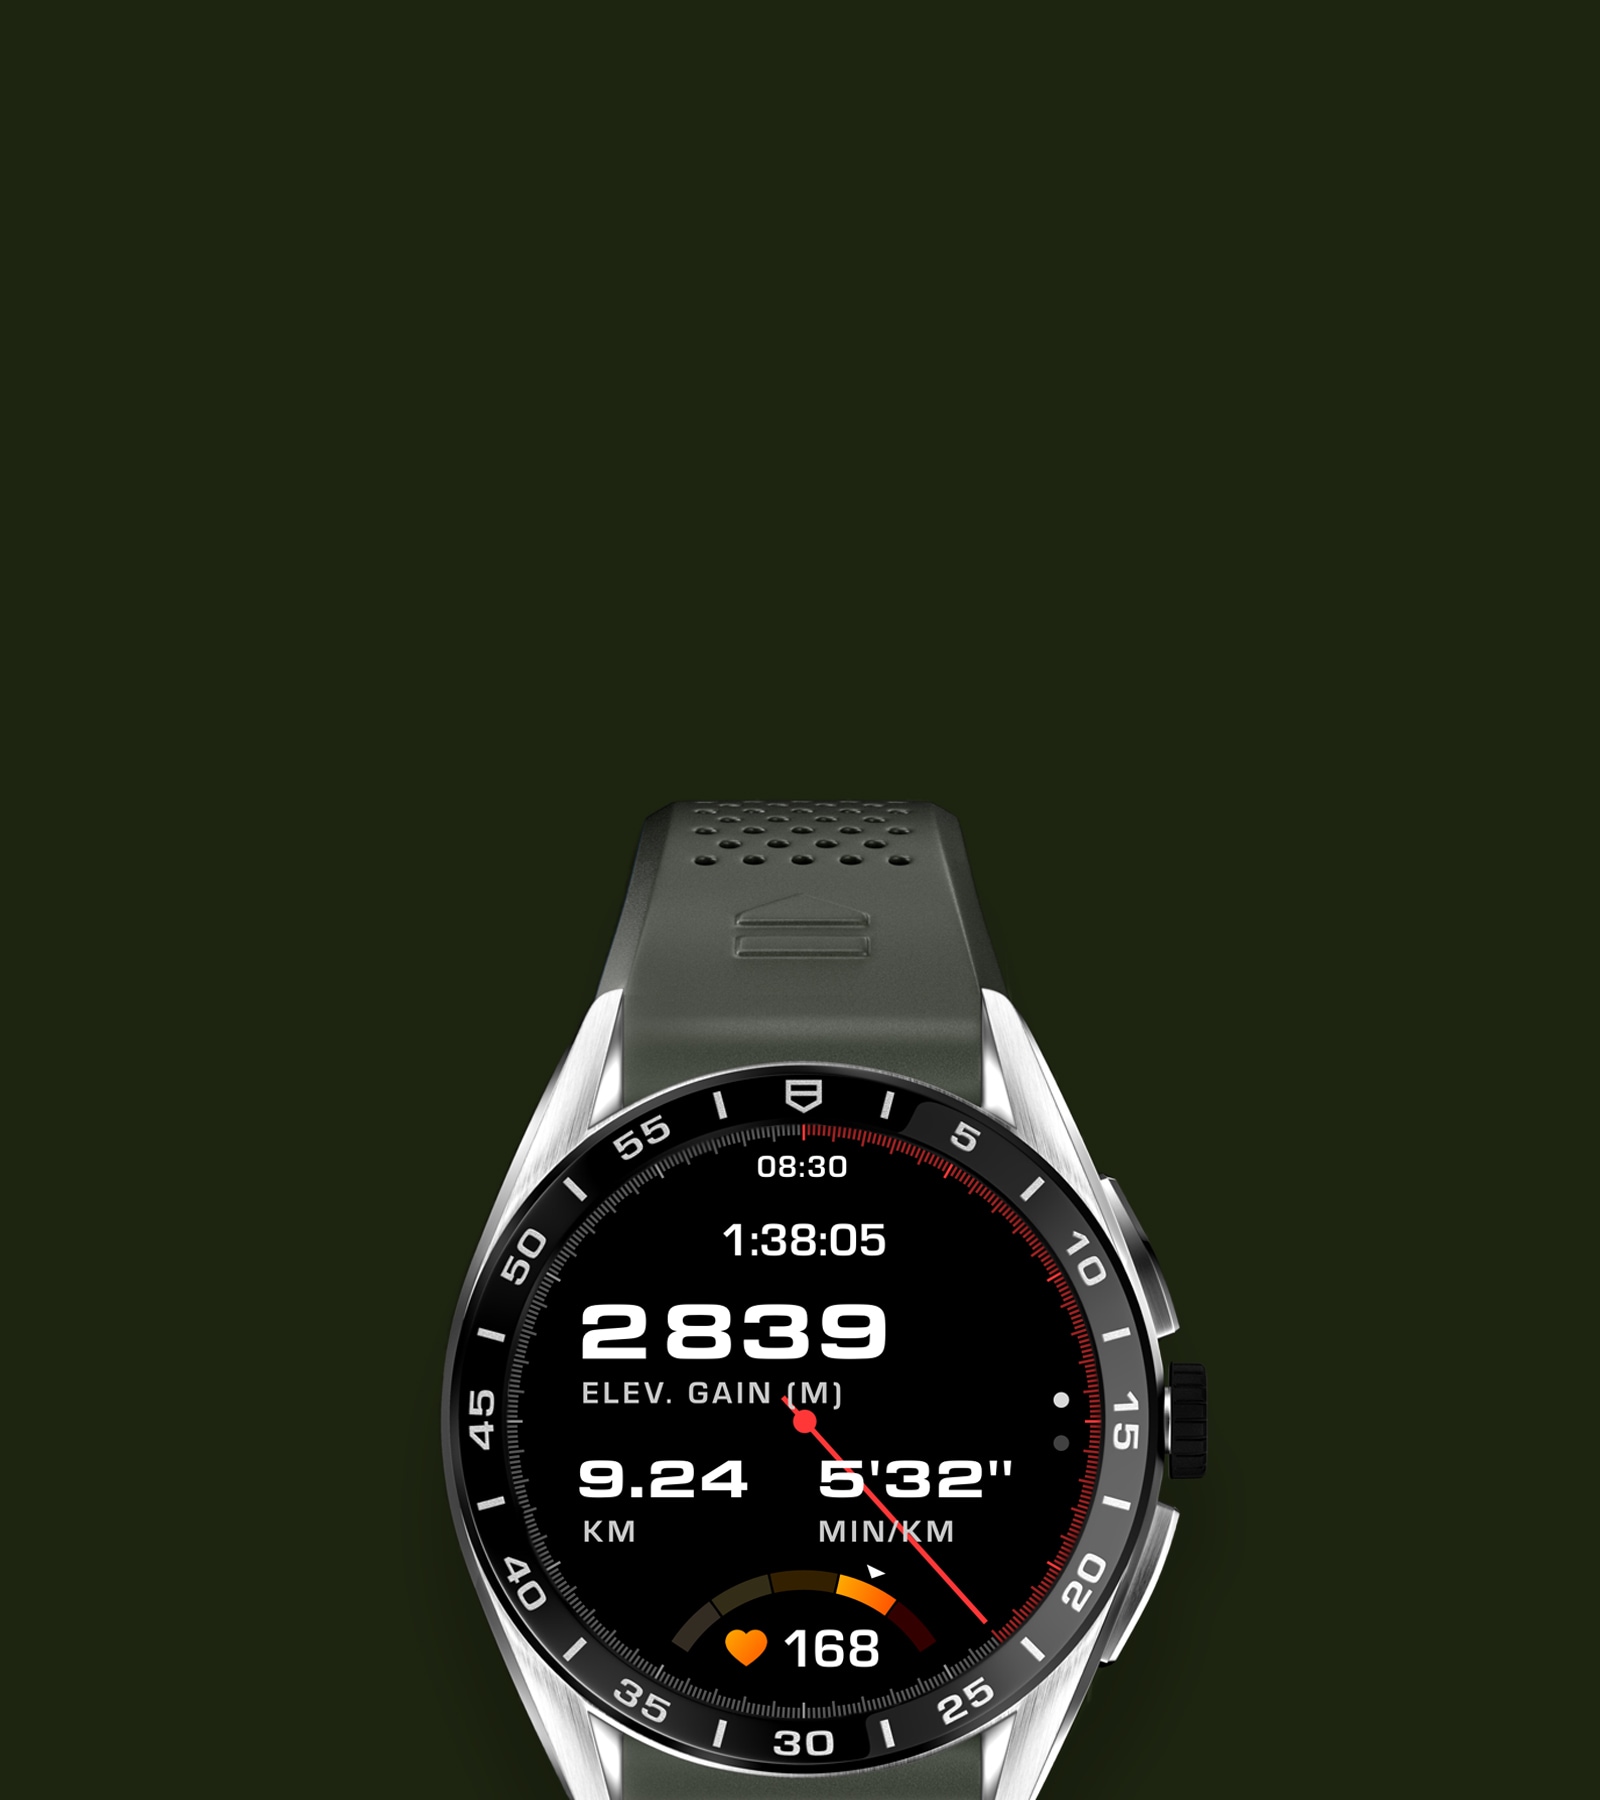 Tag Heuer Connected Analog-Digital Men's Smart Watch SBR8010